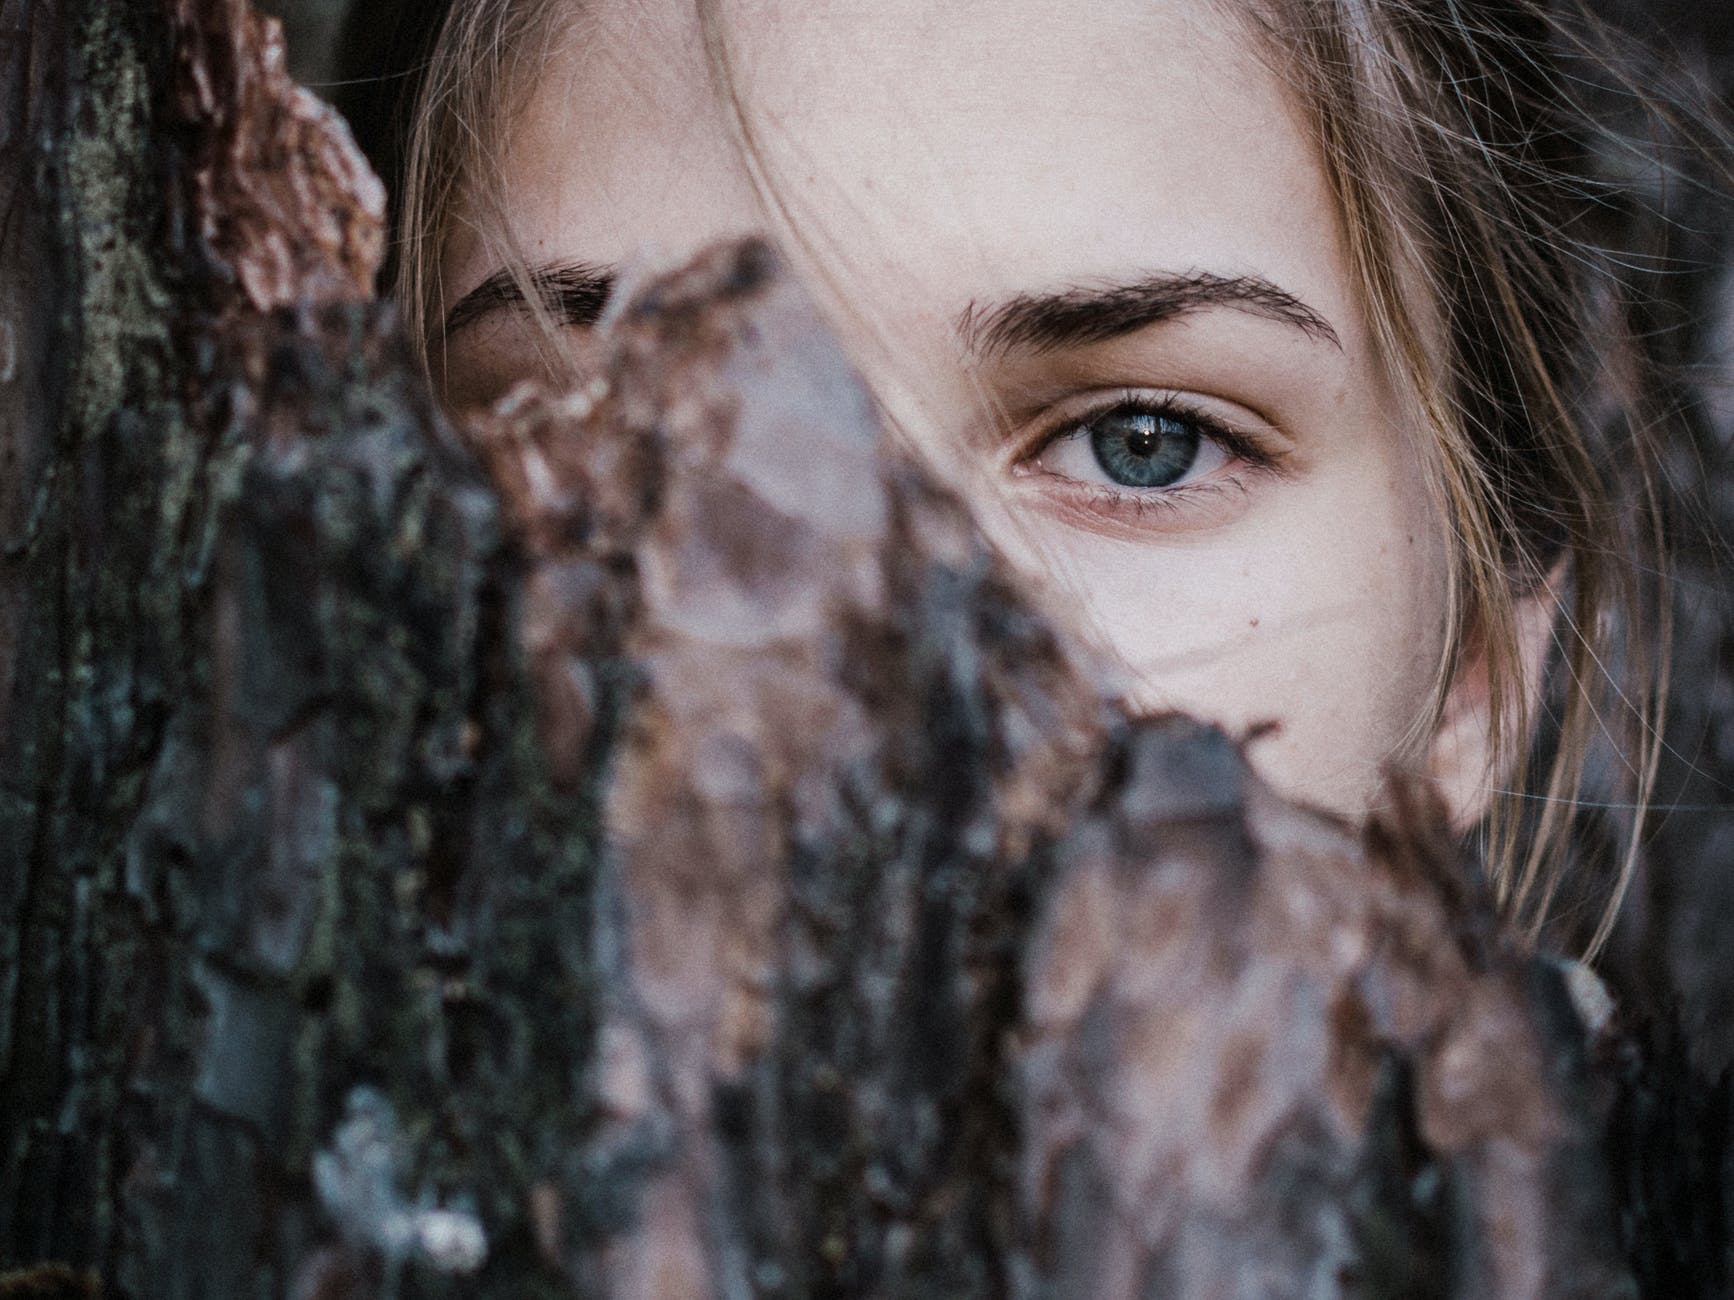 understanding introverts - calm woman behind tree bark in park